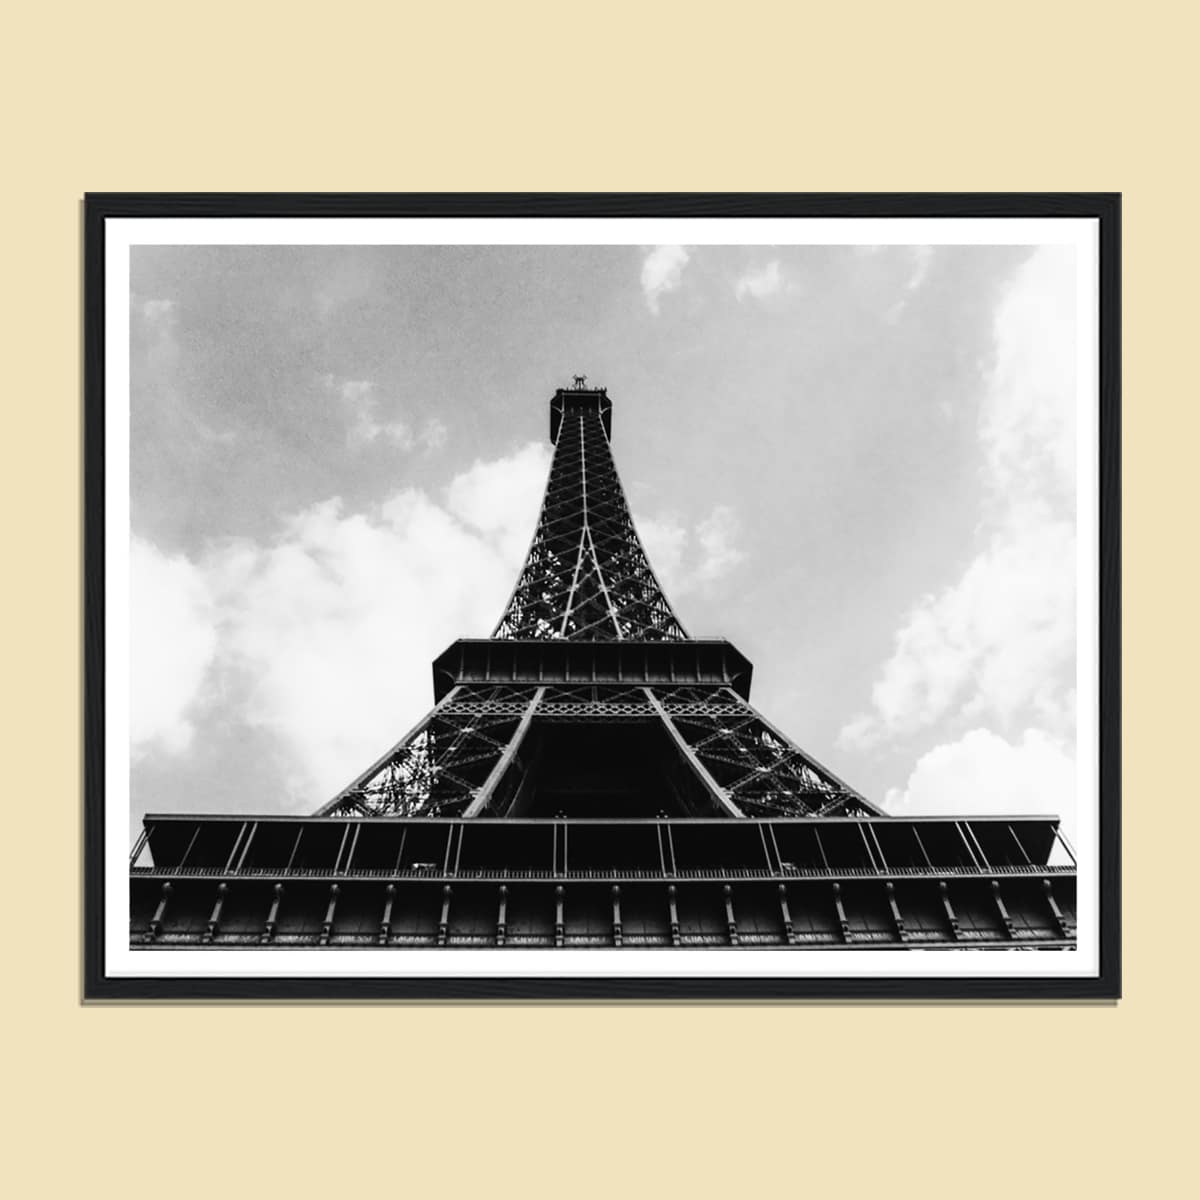 Poster-Set: Paris in Love VI